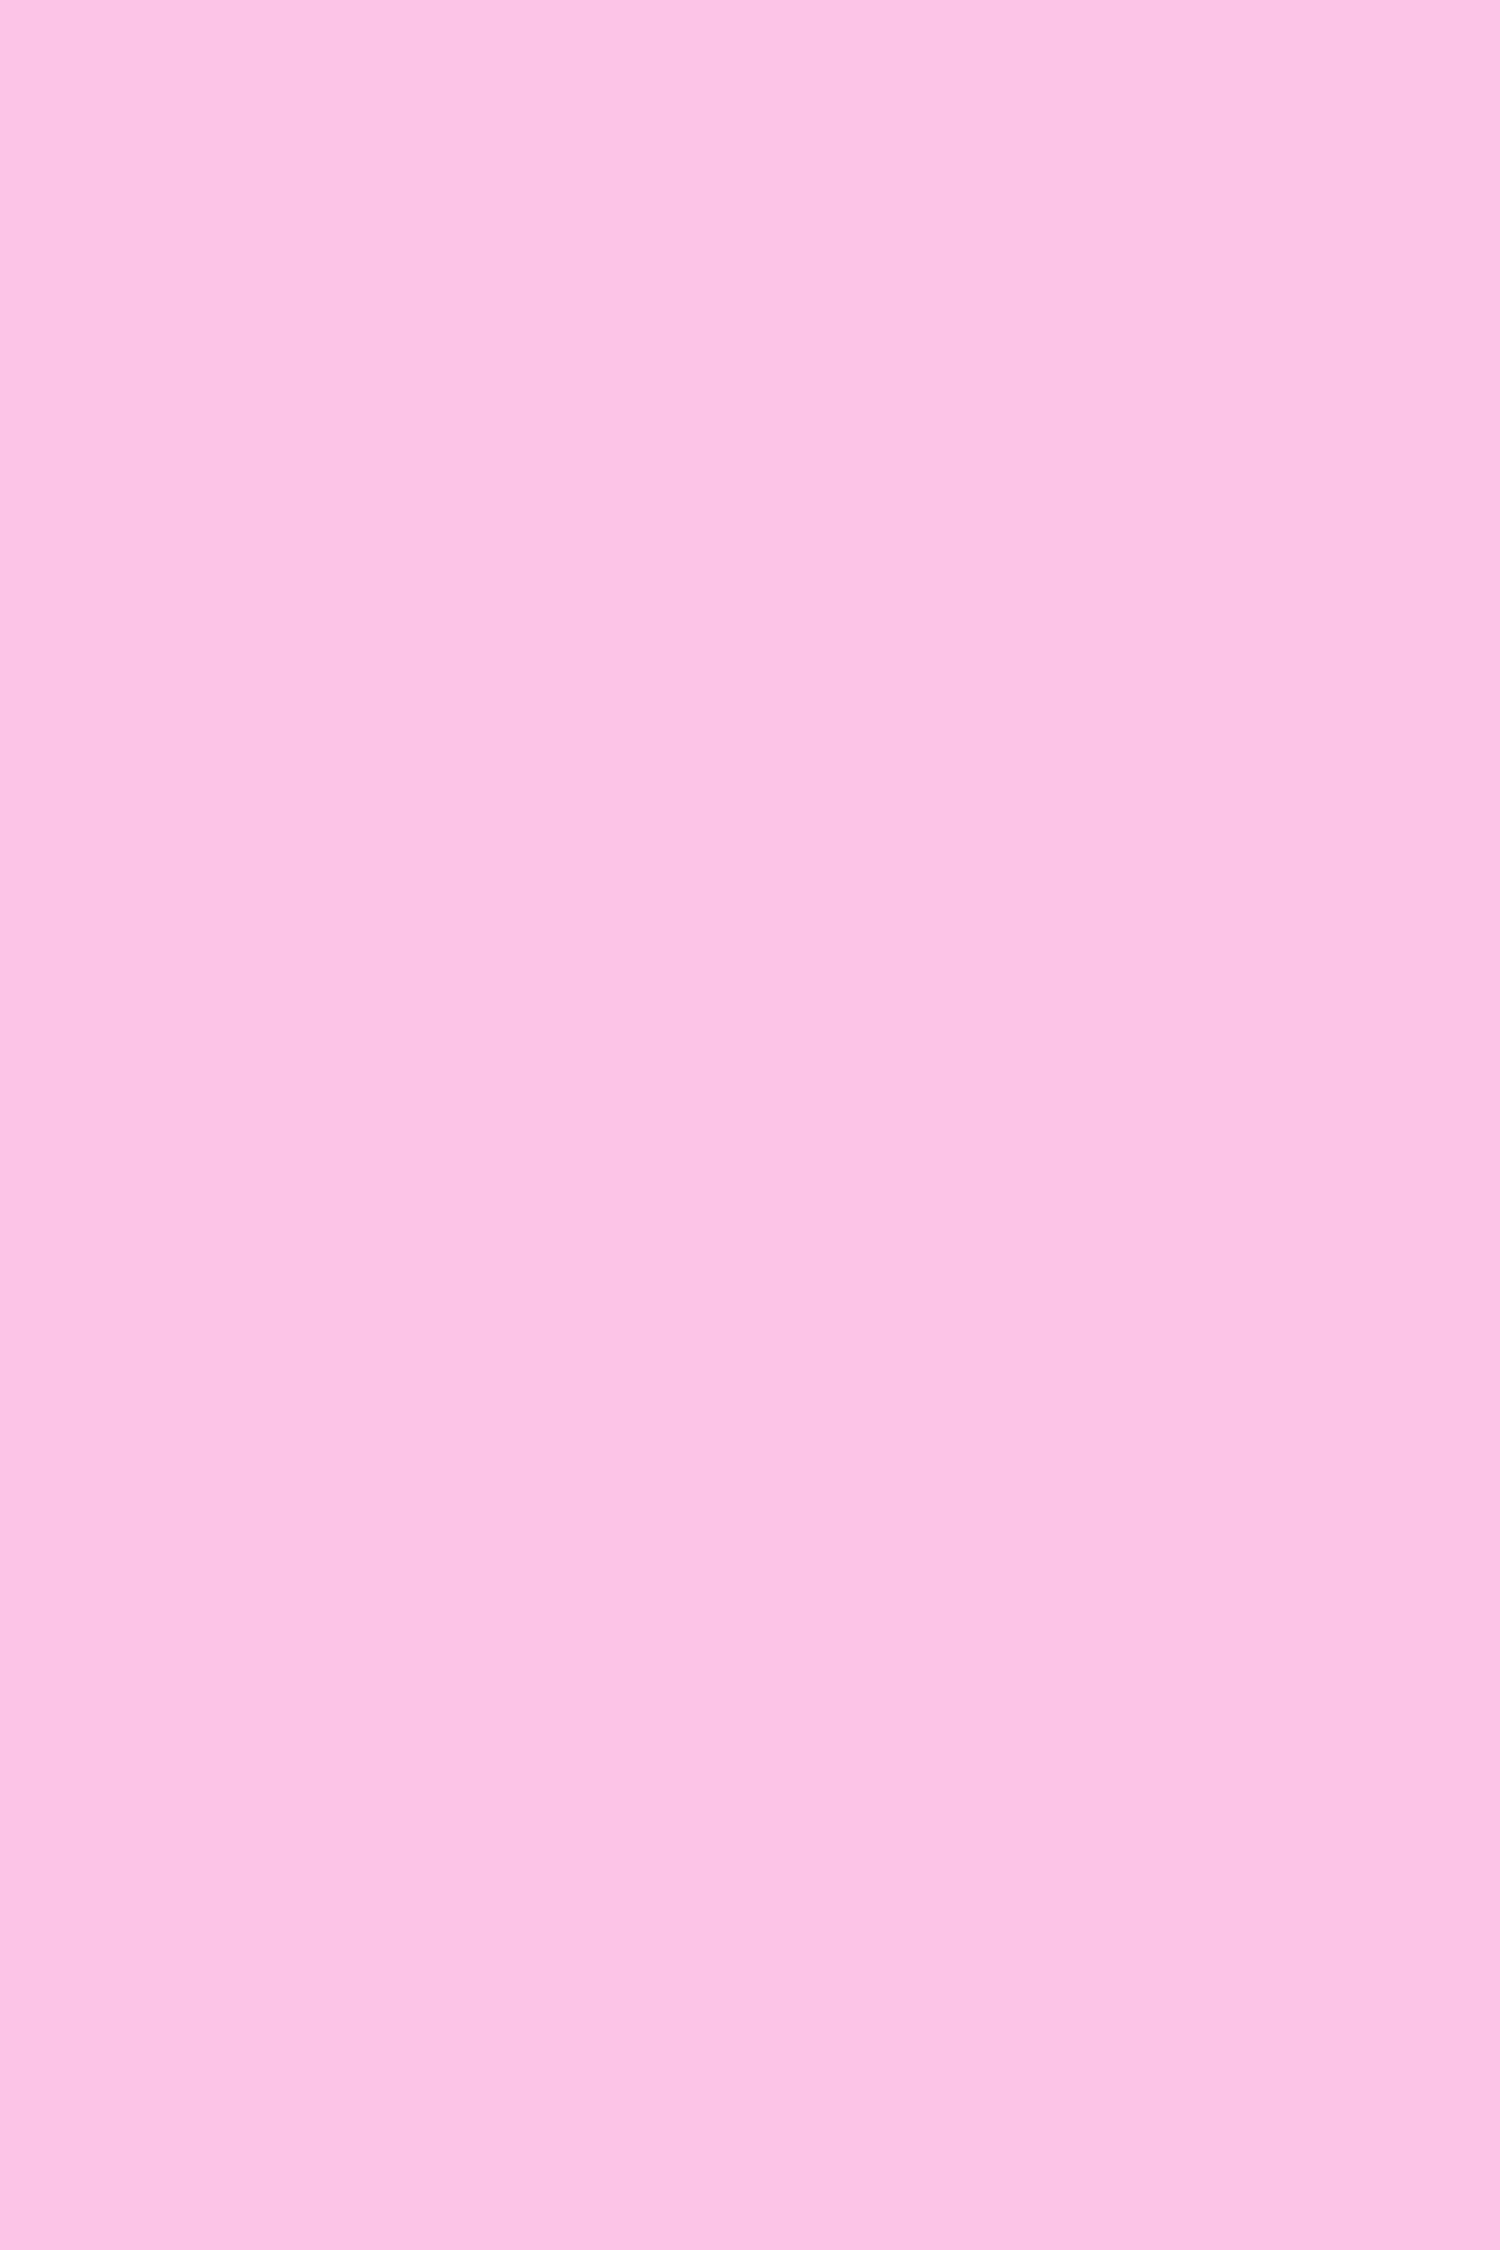 https://d3nkveufi3gdxh.cloudfront.net/catalog/product/m/o/mono-baby-pink-pashmina-shawl.jpg